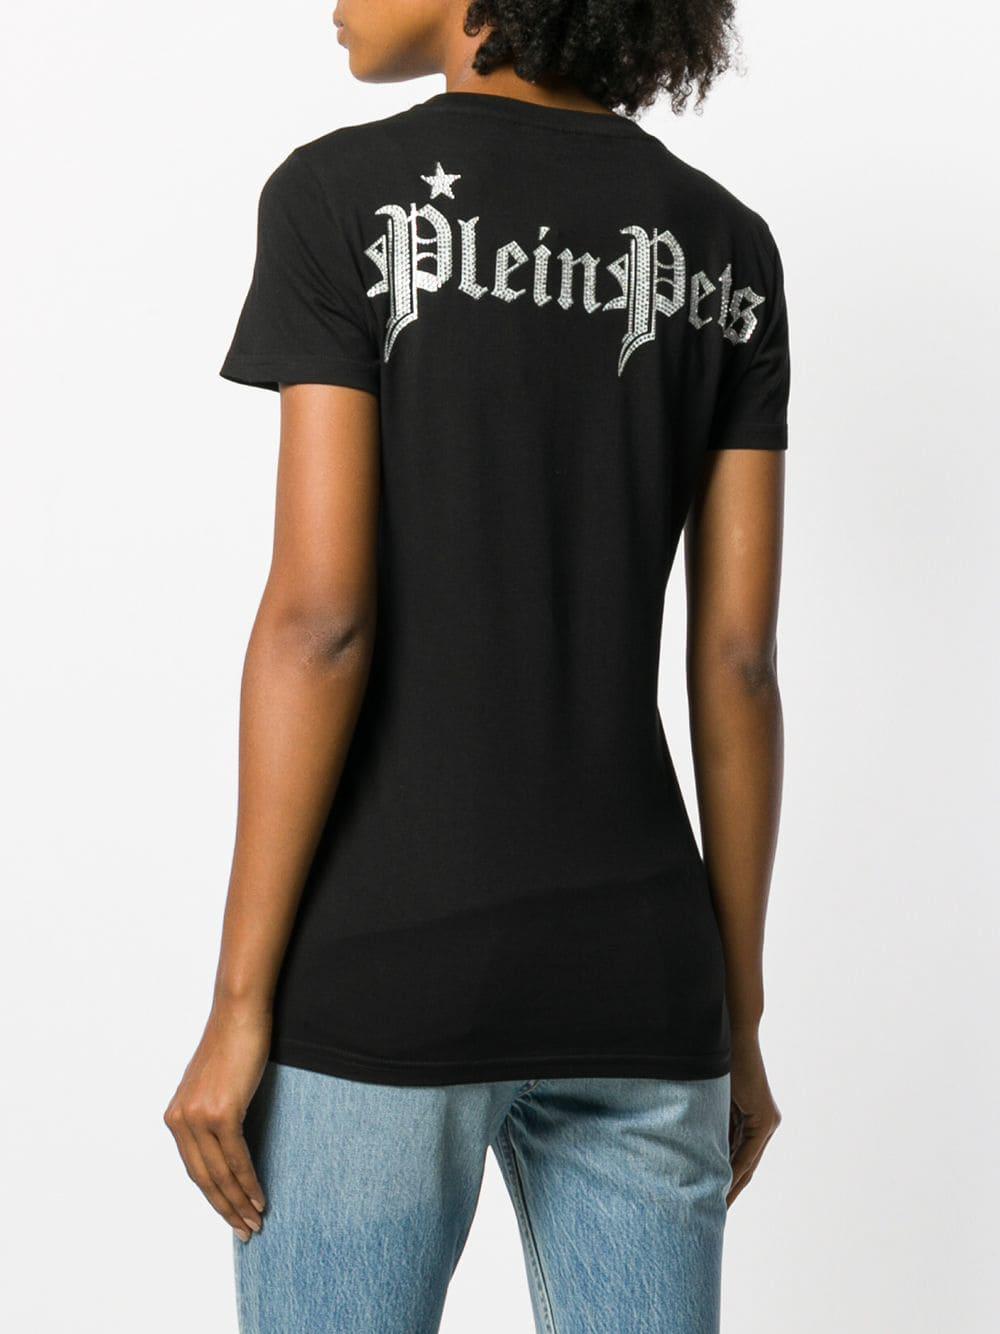 Philipp Plein Pets Teddy Bear T-shirt in Black | Lyst